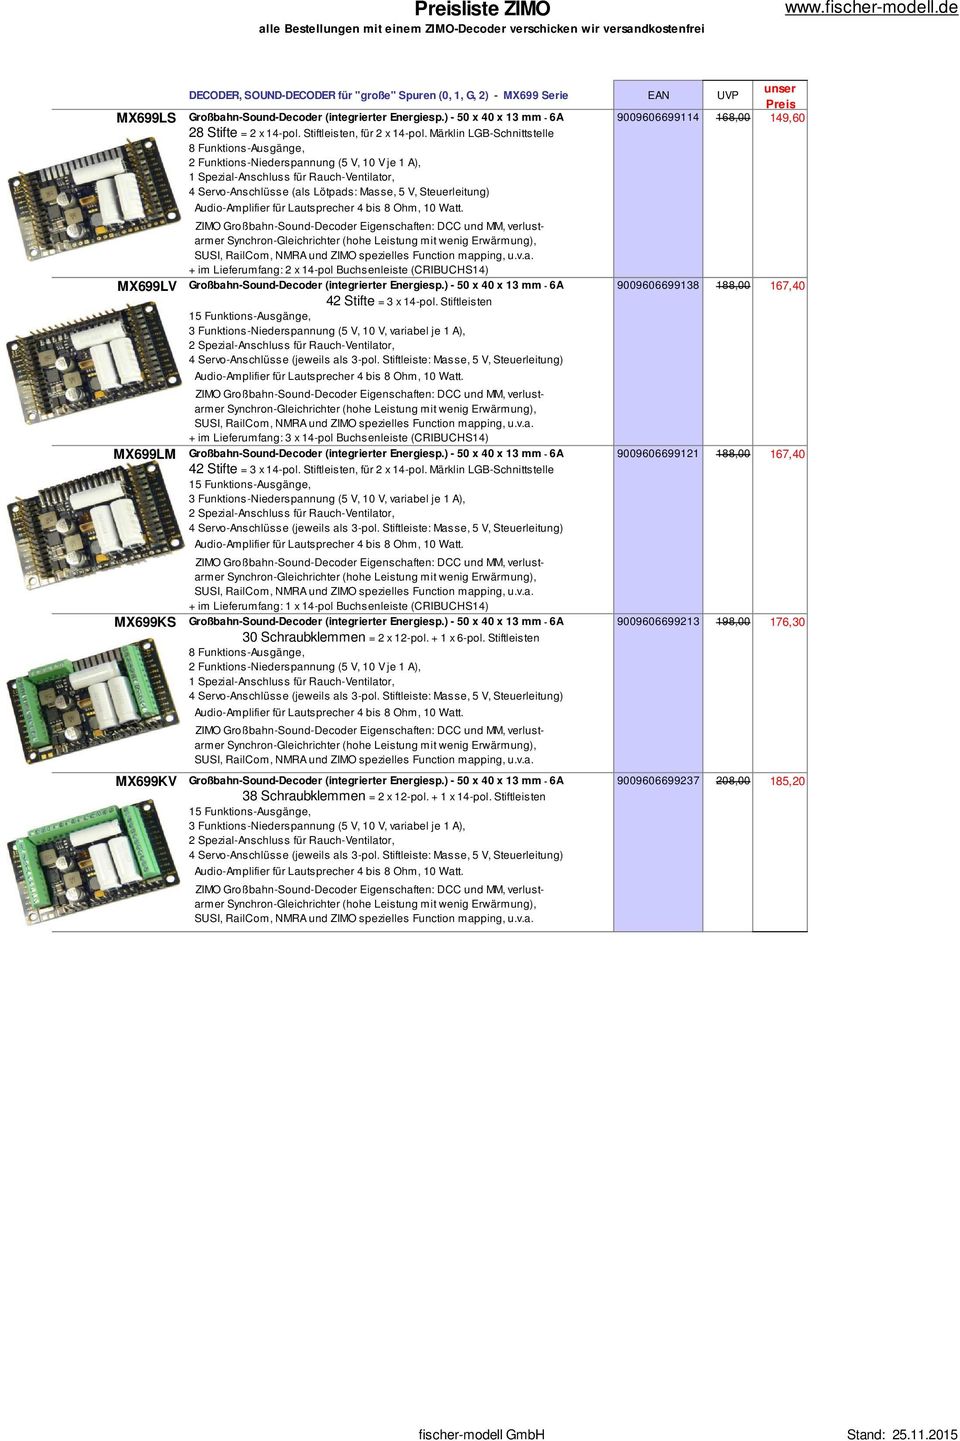 Märklin LGB-Schnittstelle 8 Funktions-Ausgänge, 2 Funktions-Niederspannung (5 V, 10 V je 1 A), 4 Servo-Anschlüsse (als Lötpads: Masse, 5 V, Steuerleitung) SUSI, RailCom, NMRA und ZIMO spezielles